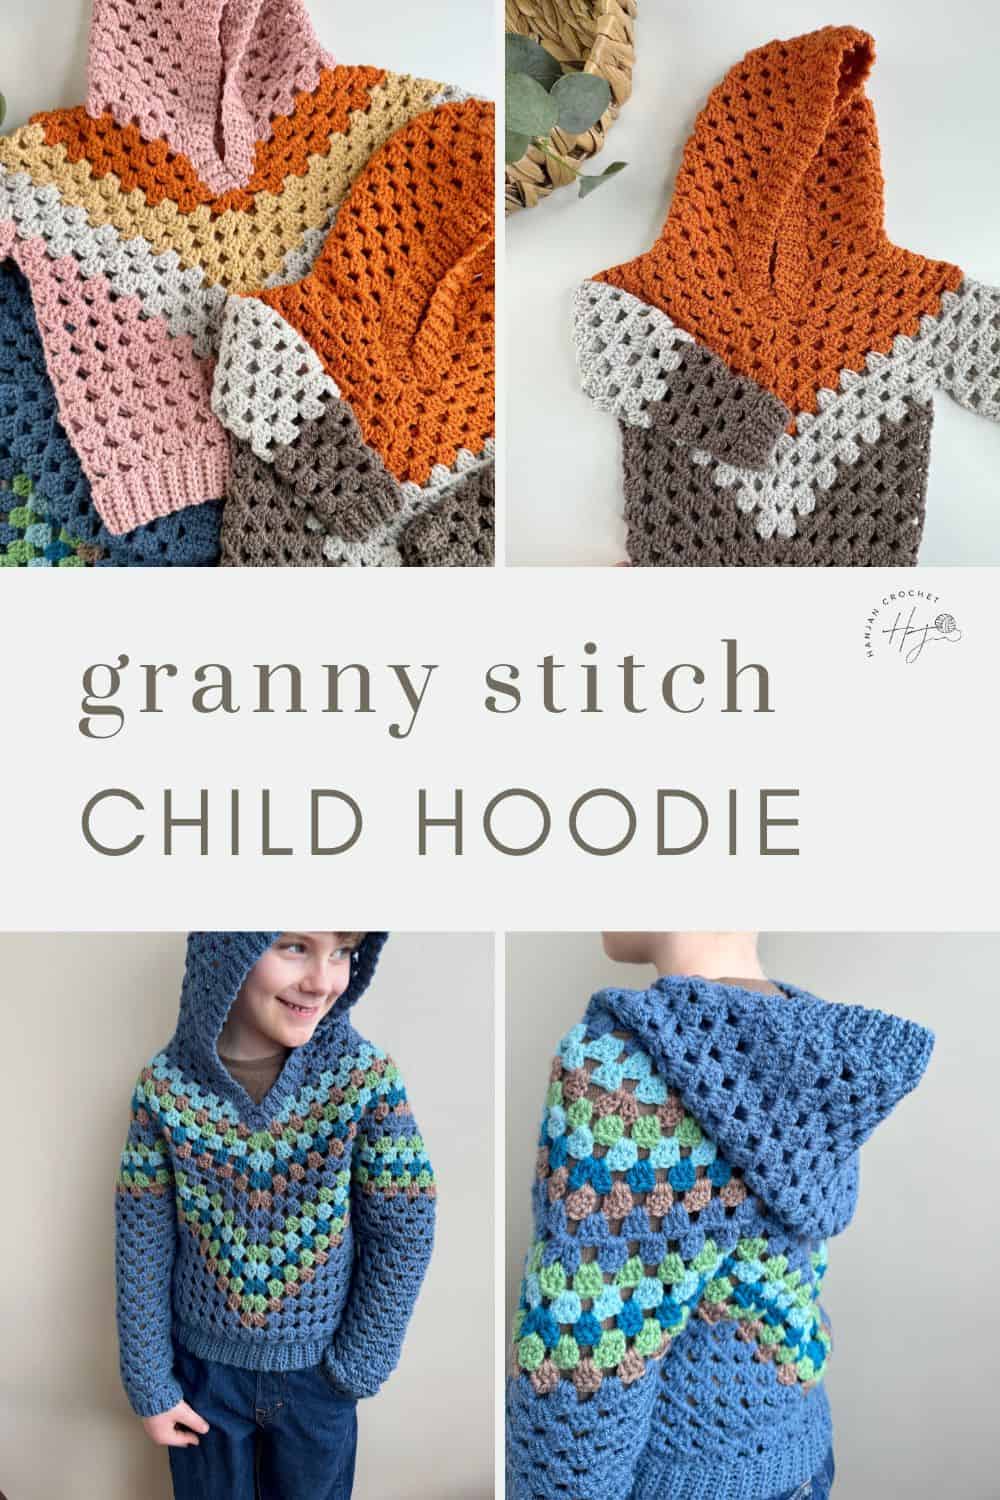 Crochet child hoodie pattern featuring a granny stitch.